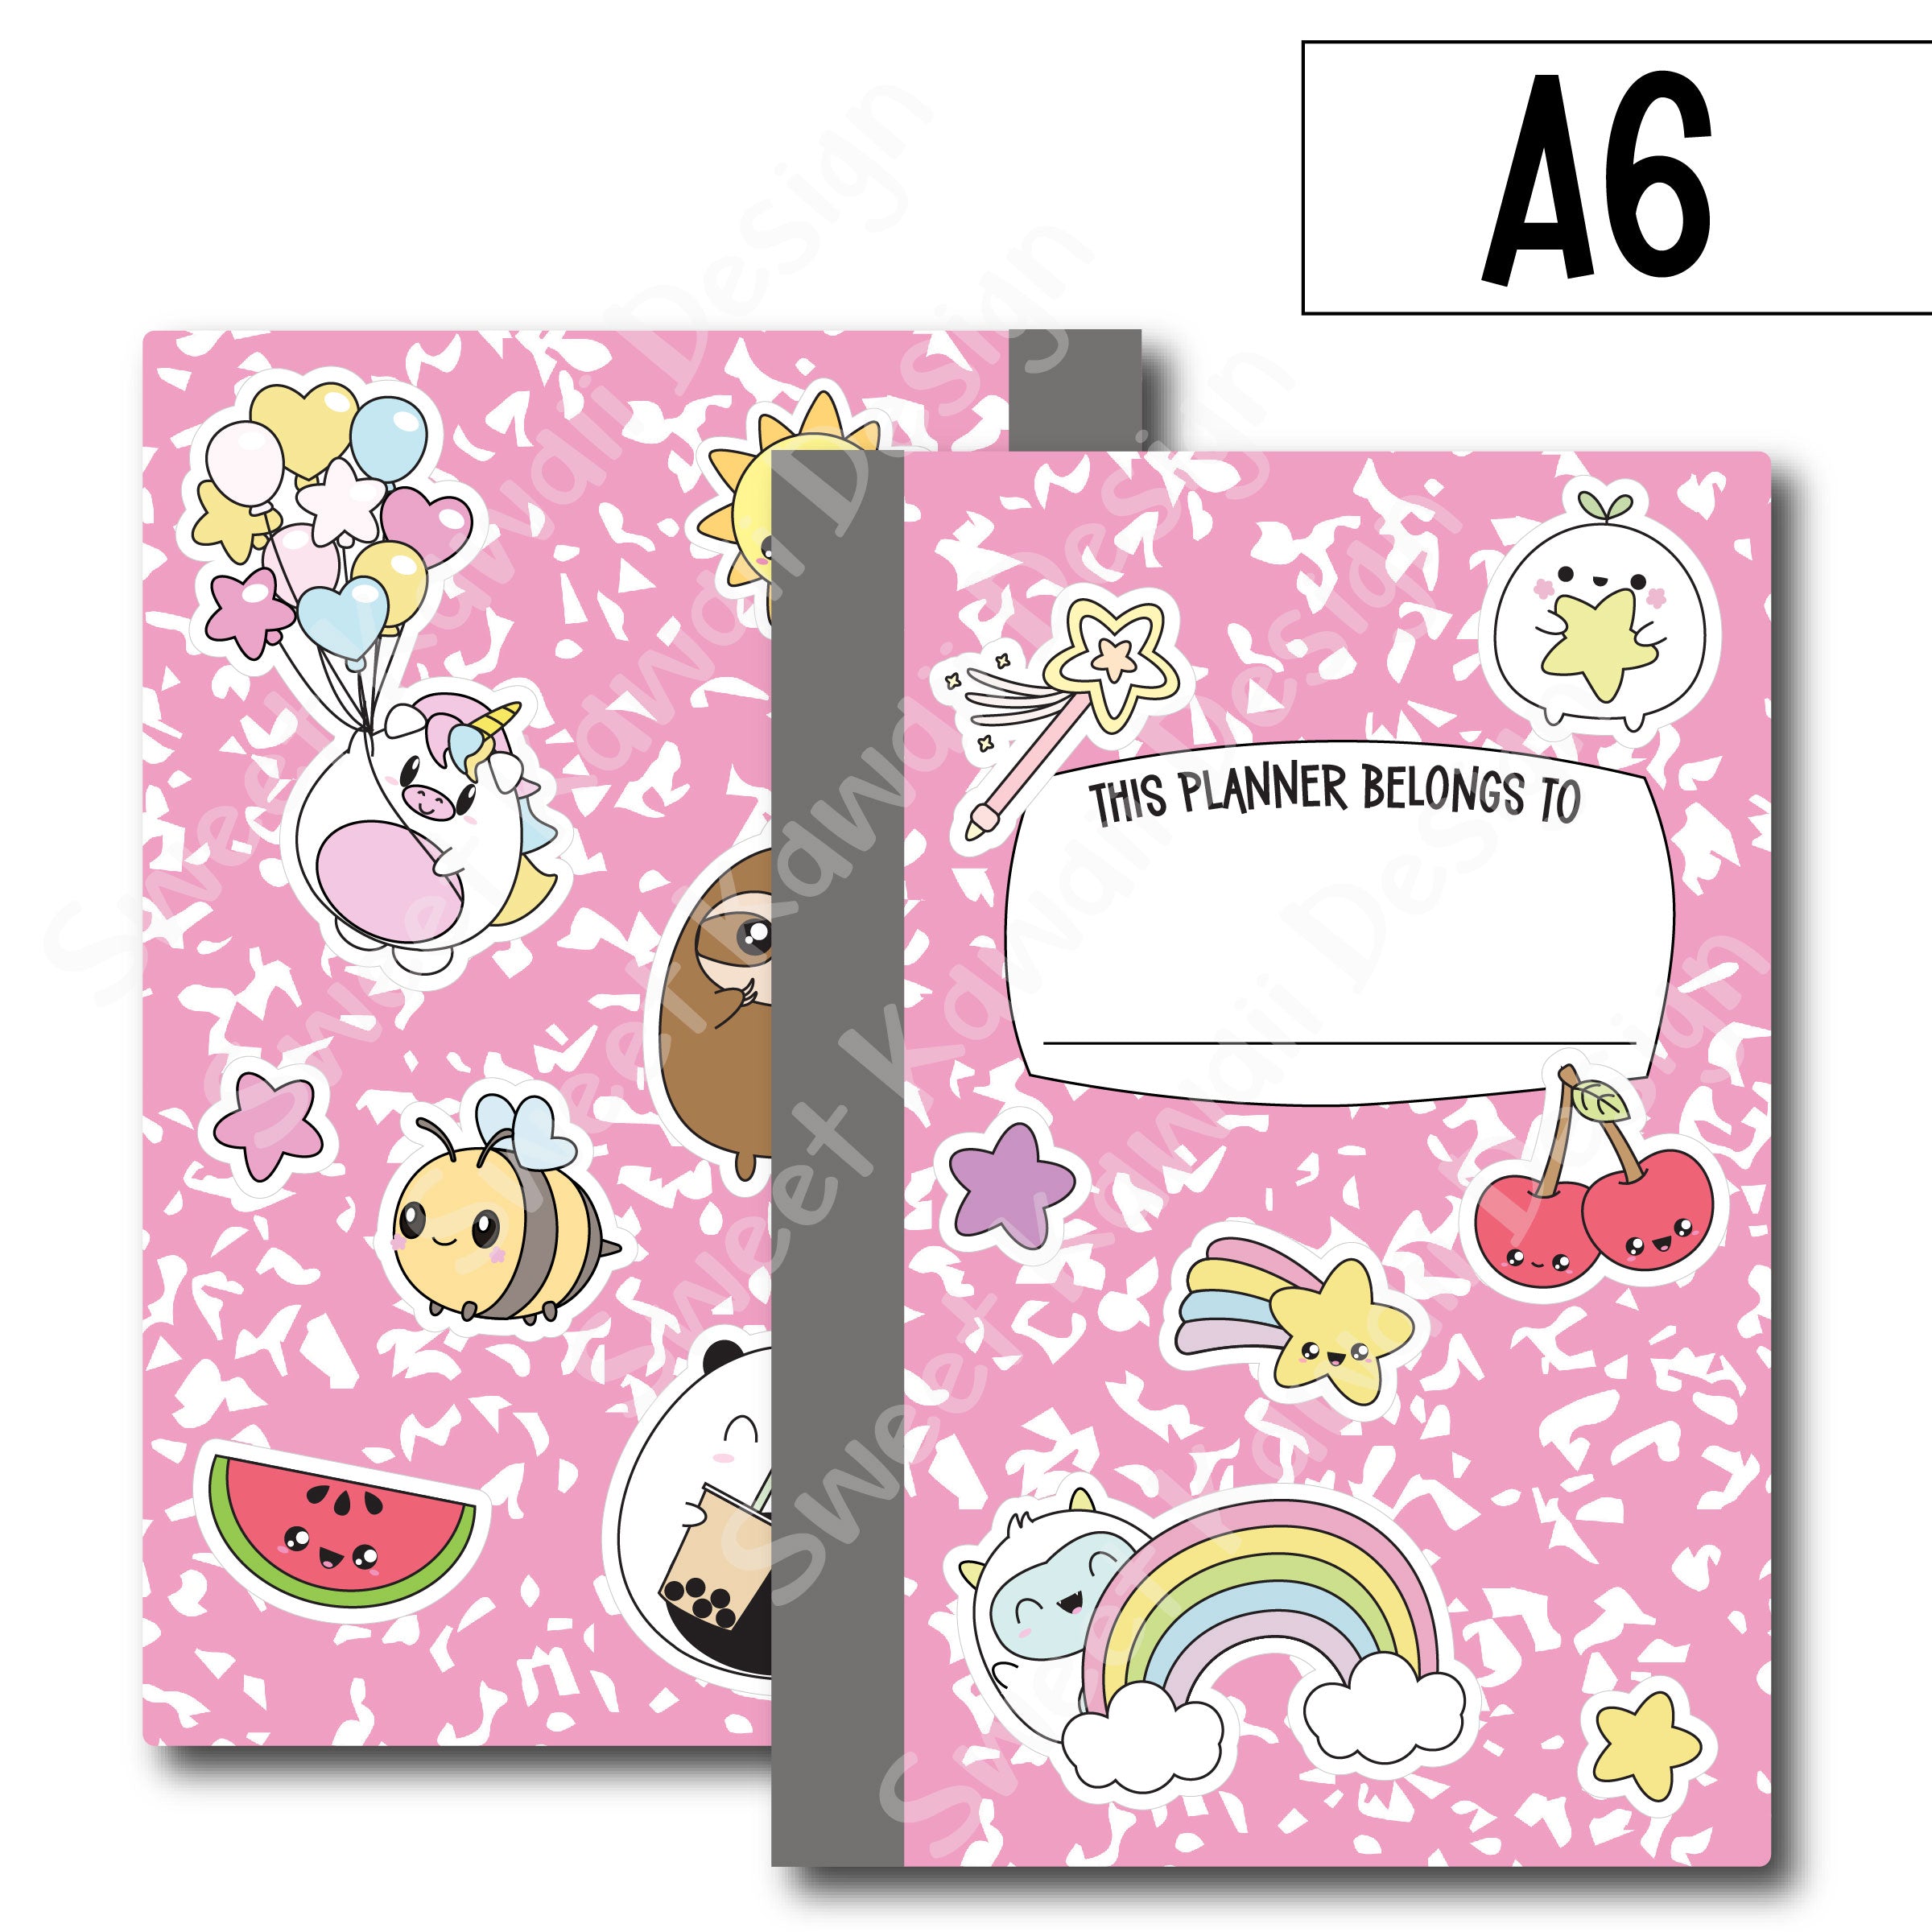 6 X Girl With Pink Bow Stickers. Cute Stickers. Fashion. Snail Mail  Hobonichi Midori Planner Journal Decorations. Ephemera. 